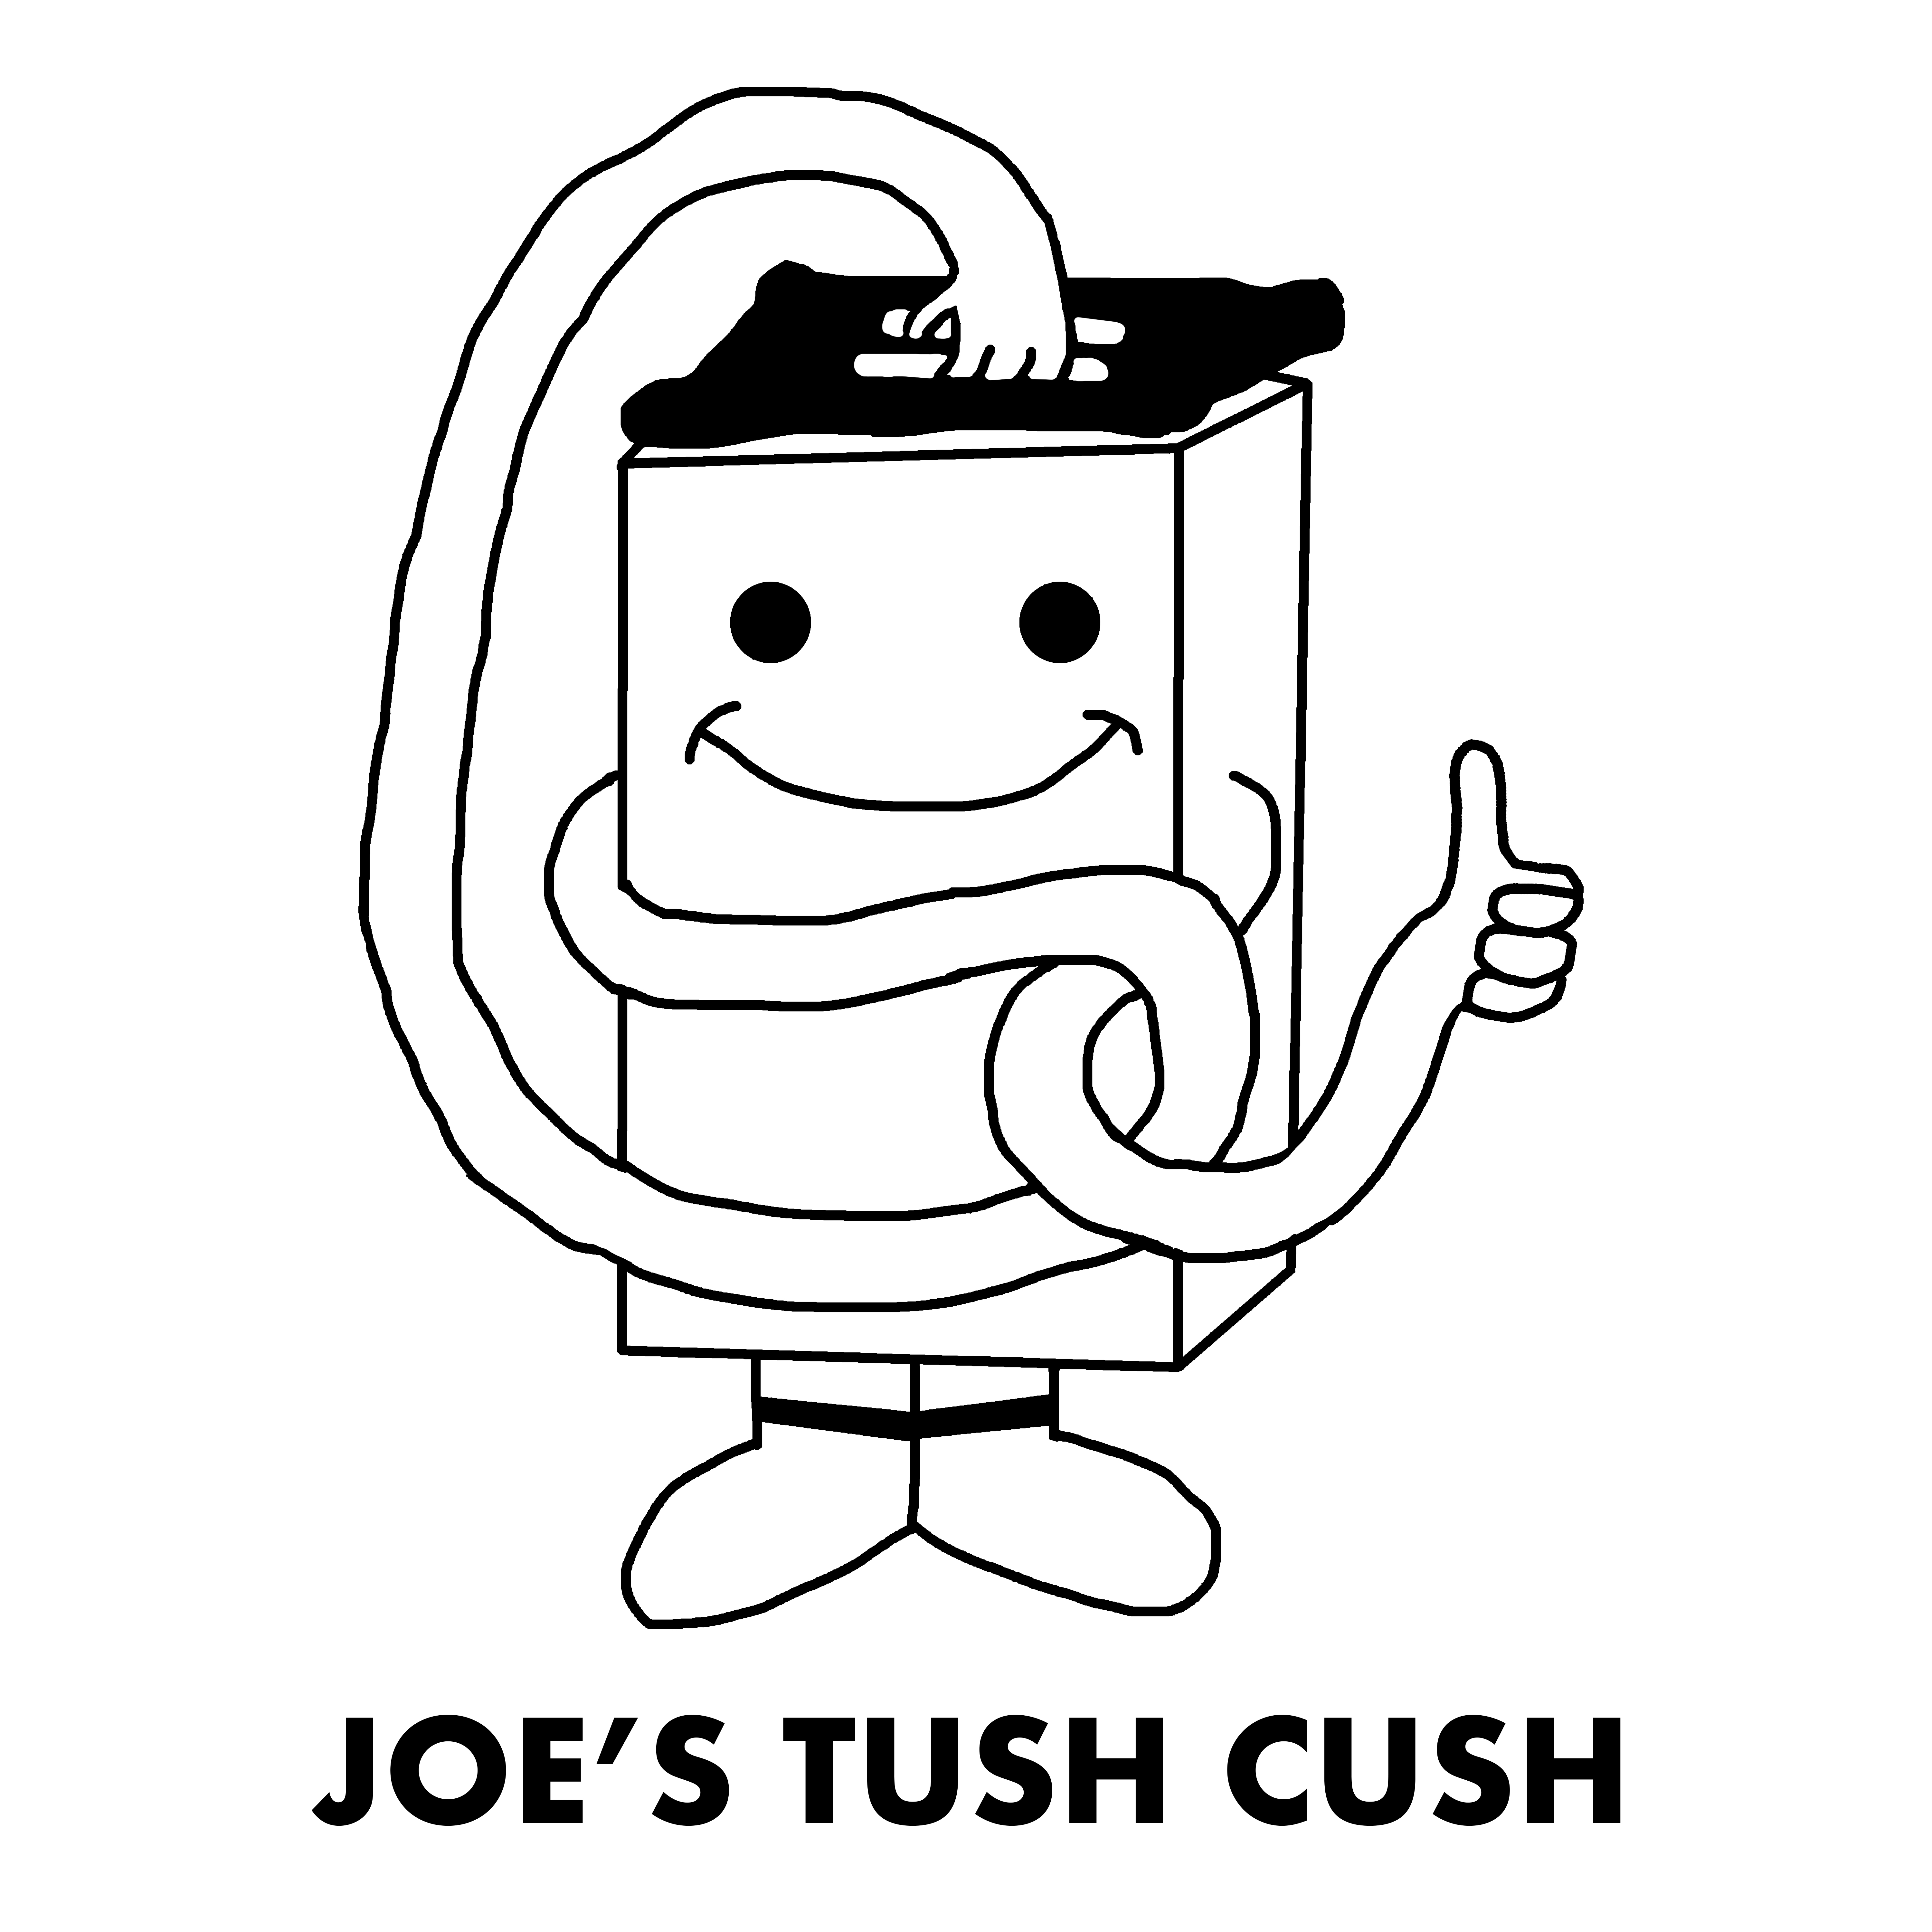 About  joe's tush cush